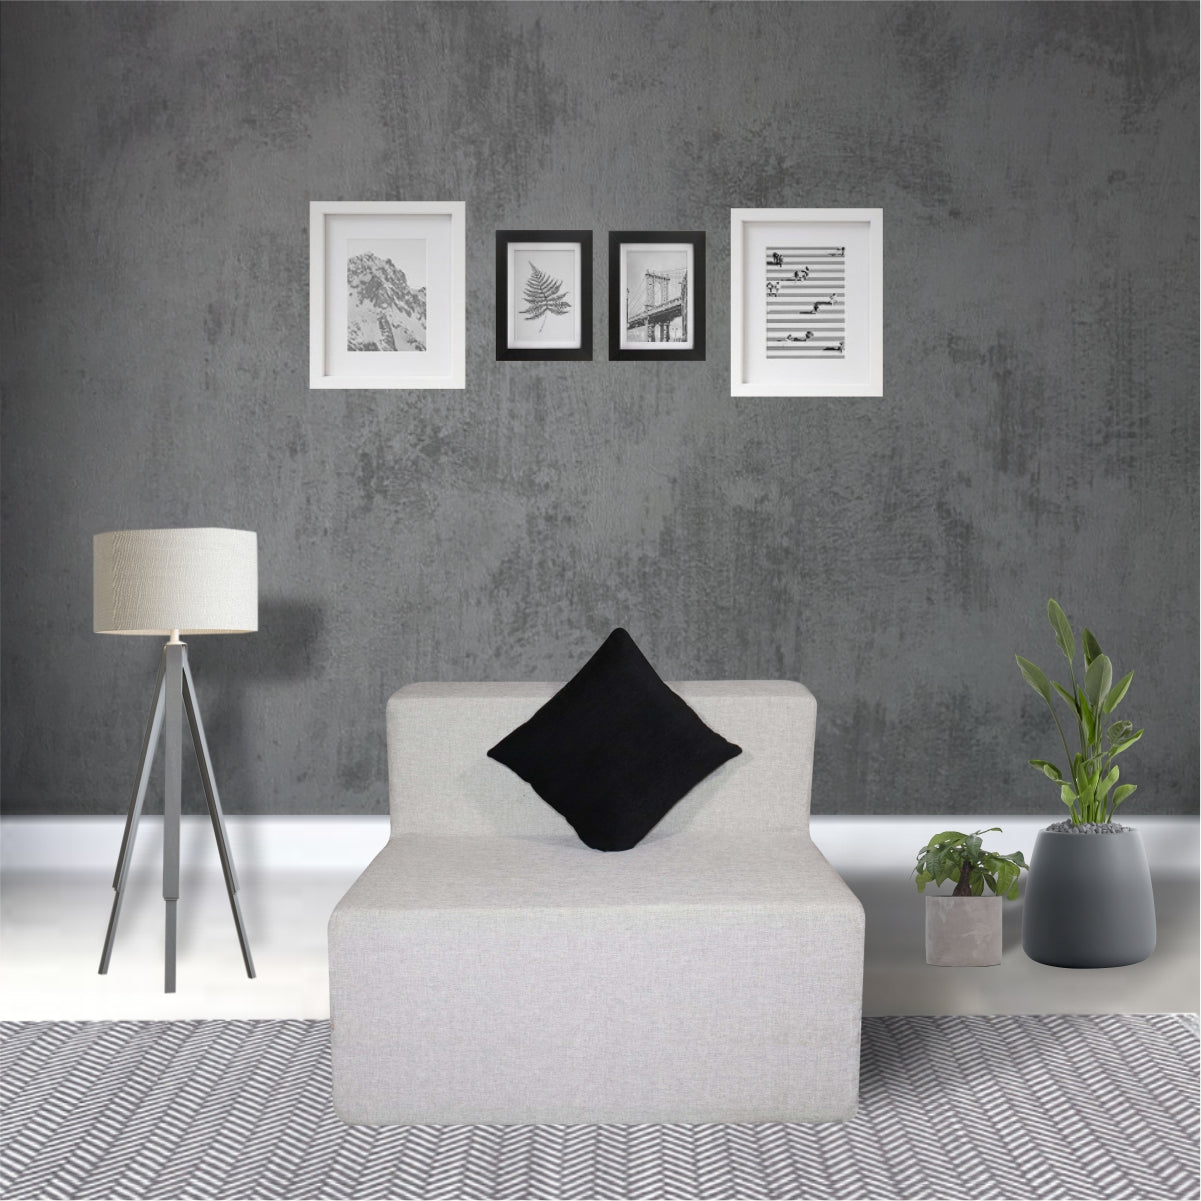 Light Grey Jute Fabric 6'×3' Sofa cum Bed with 1 Cushion